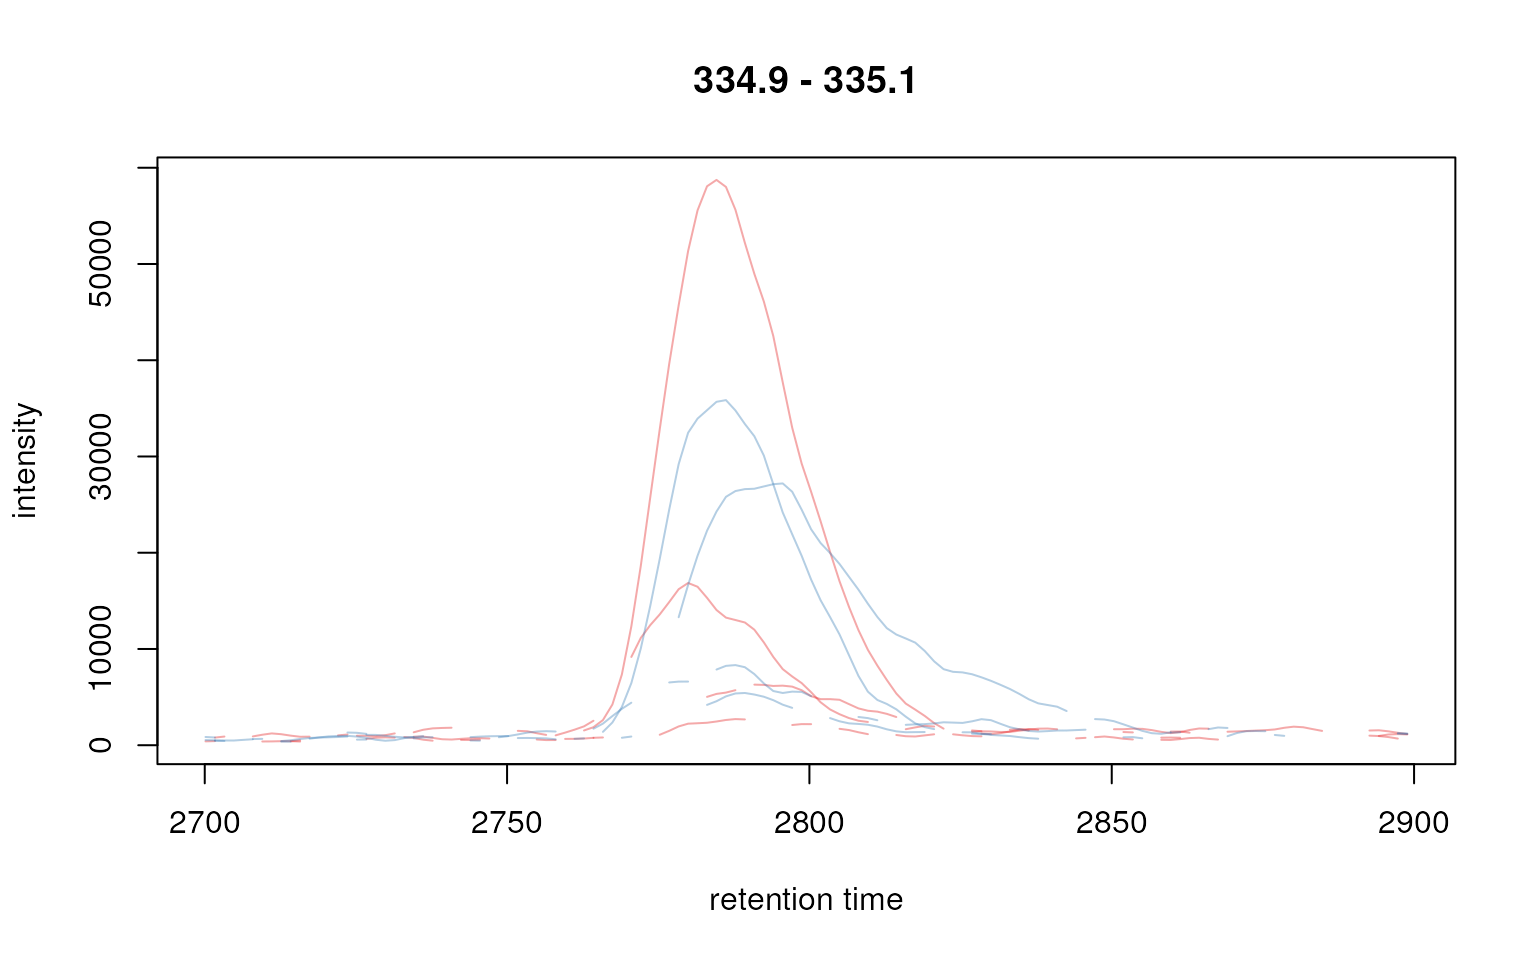 Extracted ion chromatogram for one peak.